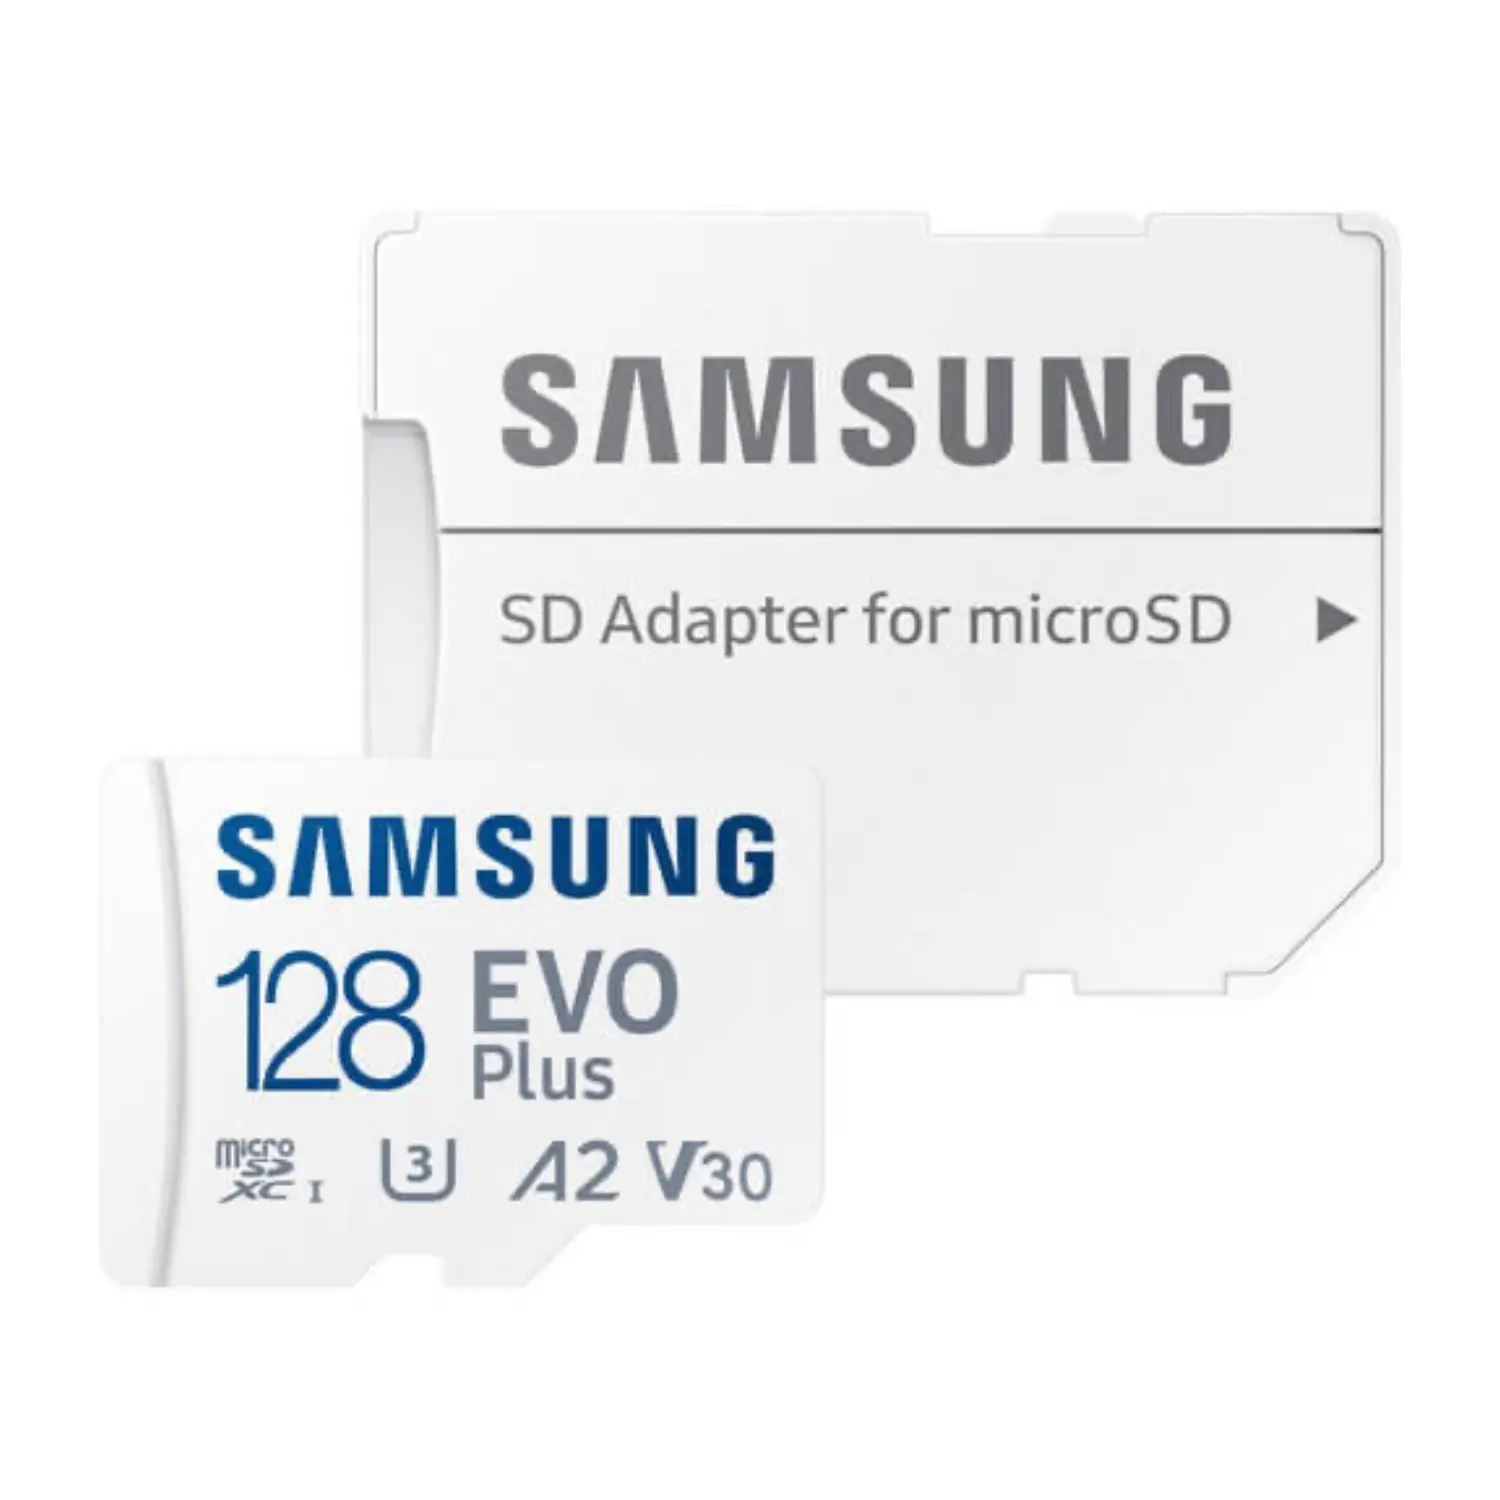 Samsung 128GB EVO Plus microSDXC Memory Card